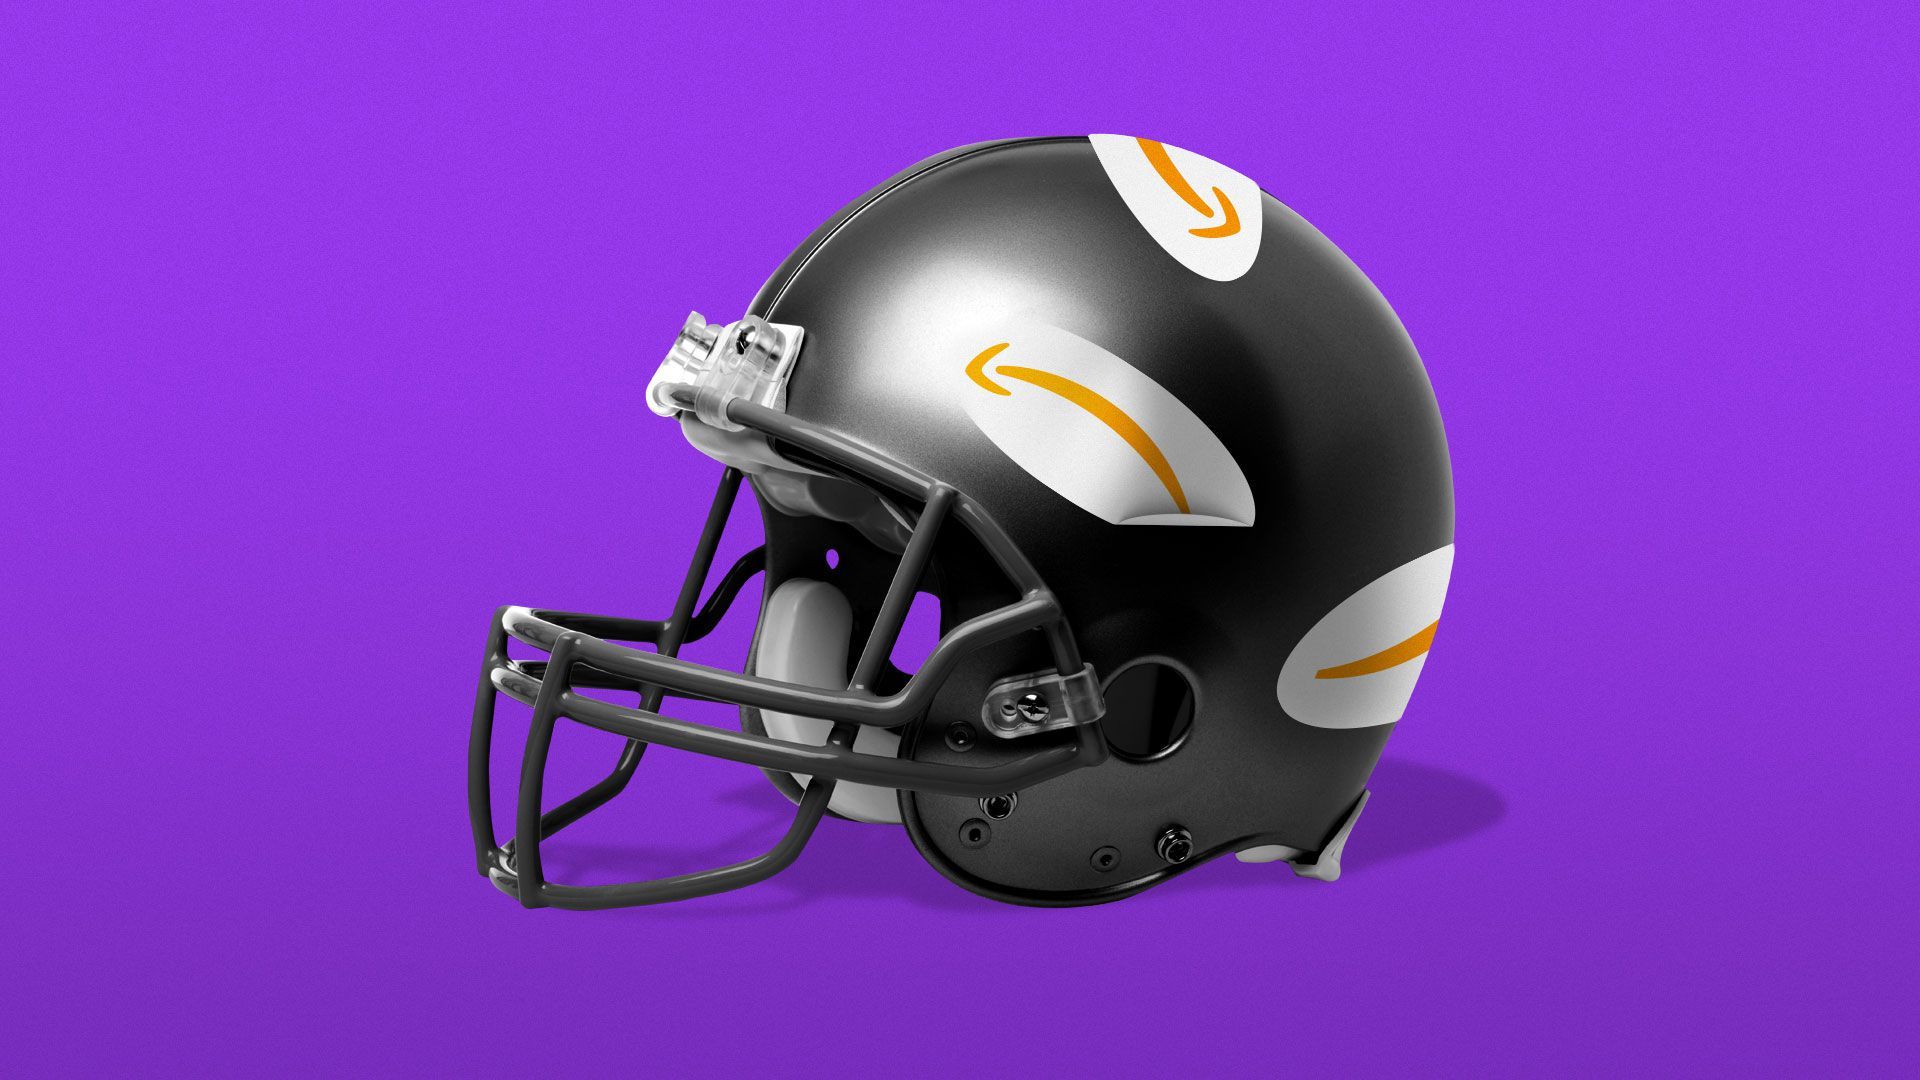 Illustration of football helmet with Amazon smile stickers